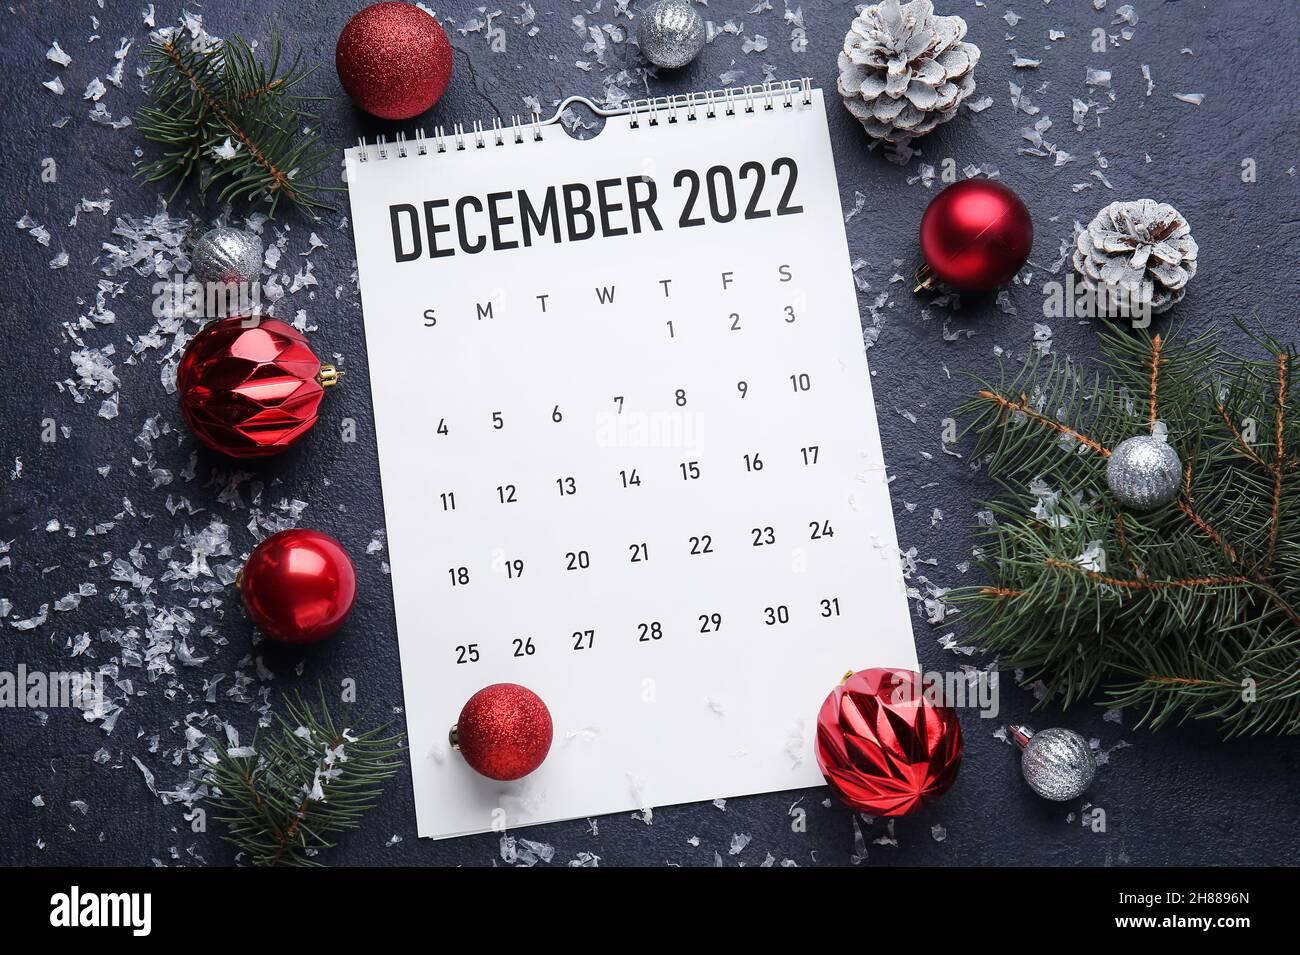 Paper calendar for December 2022 and Christmas decor on dark